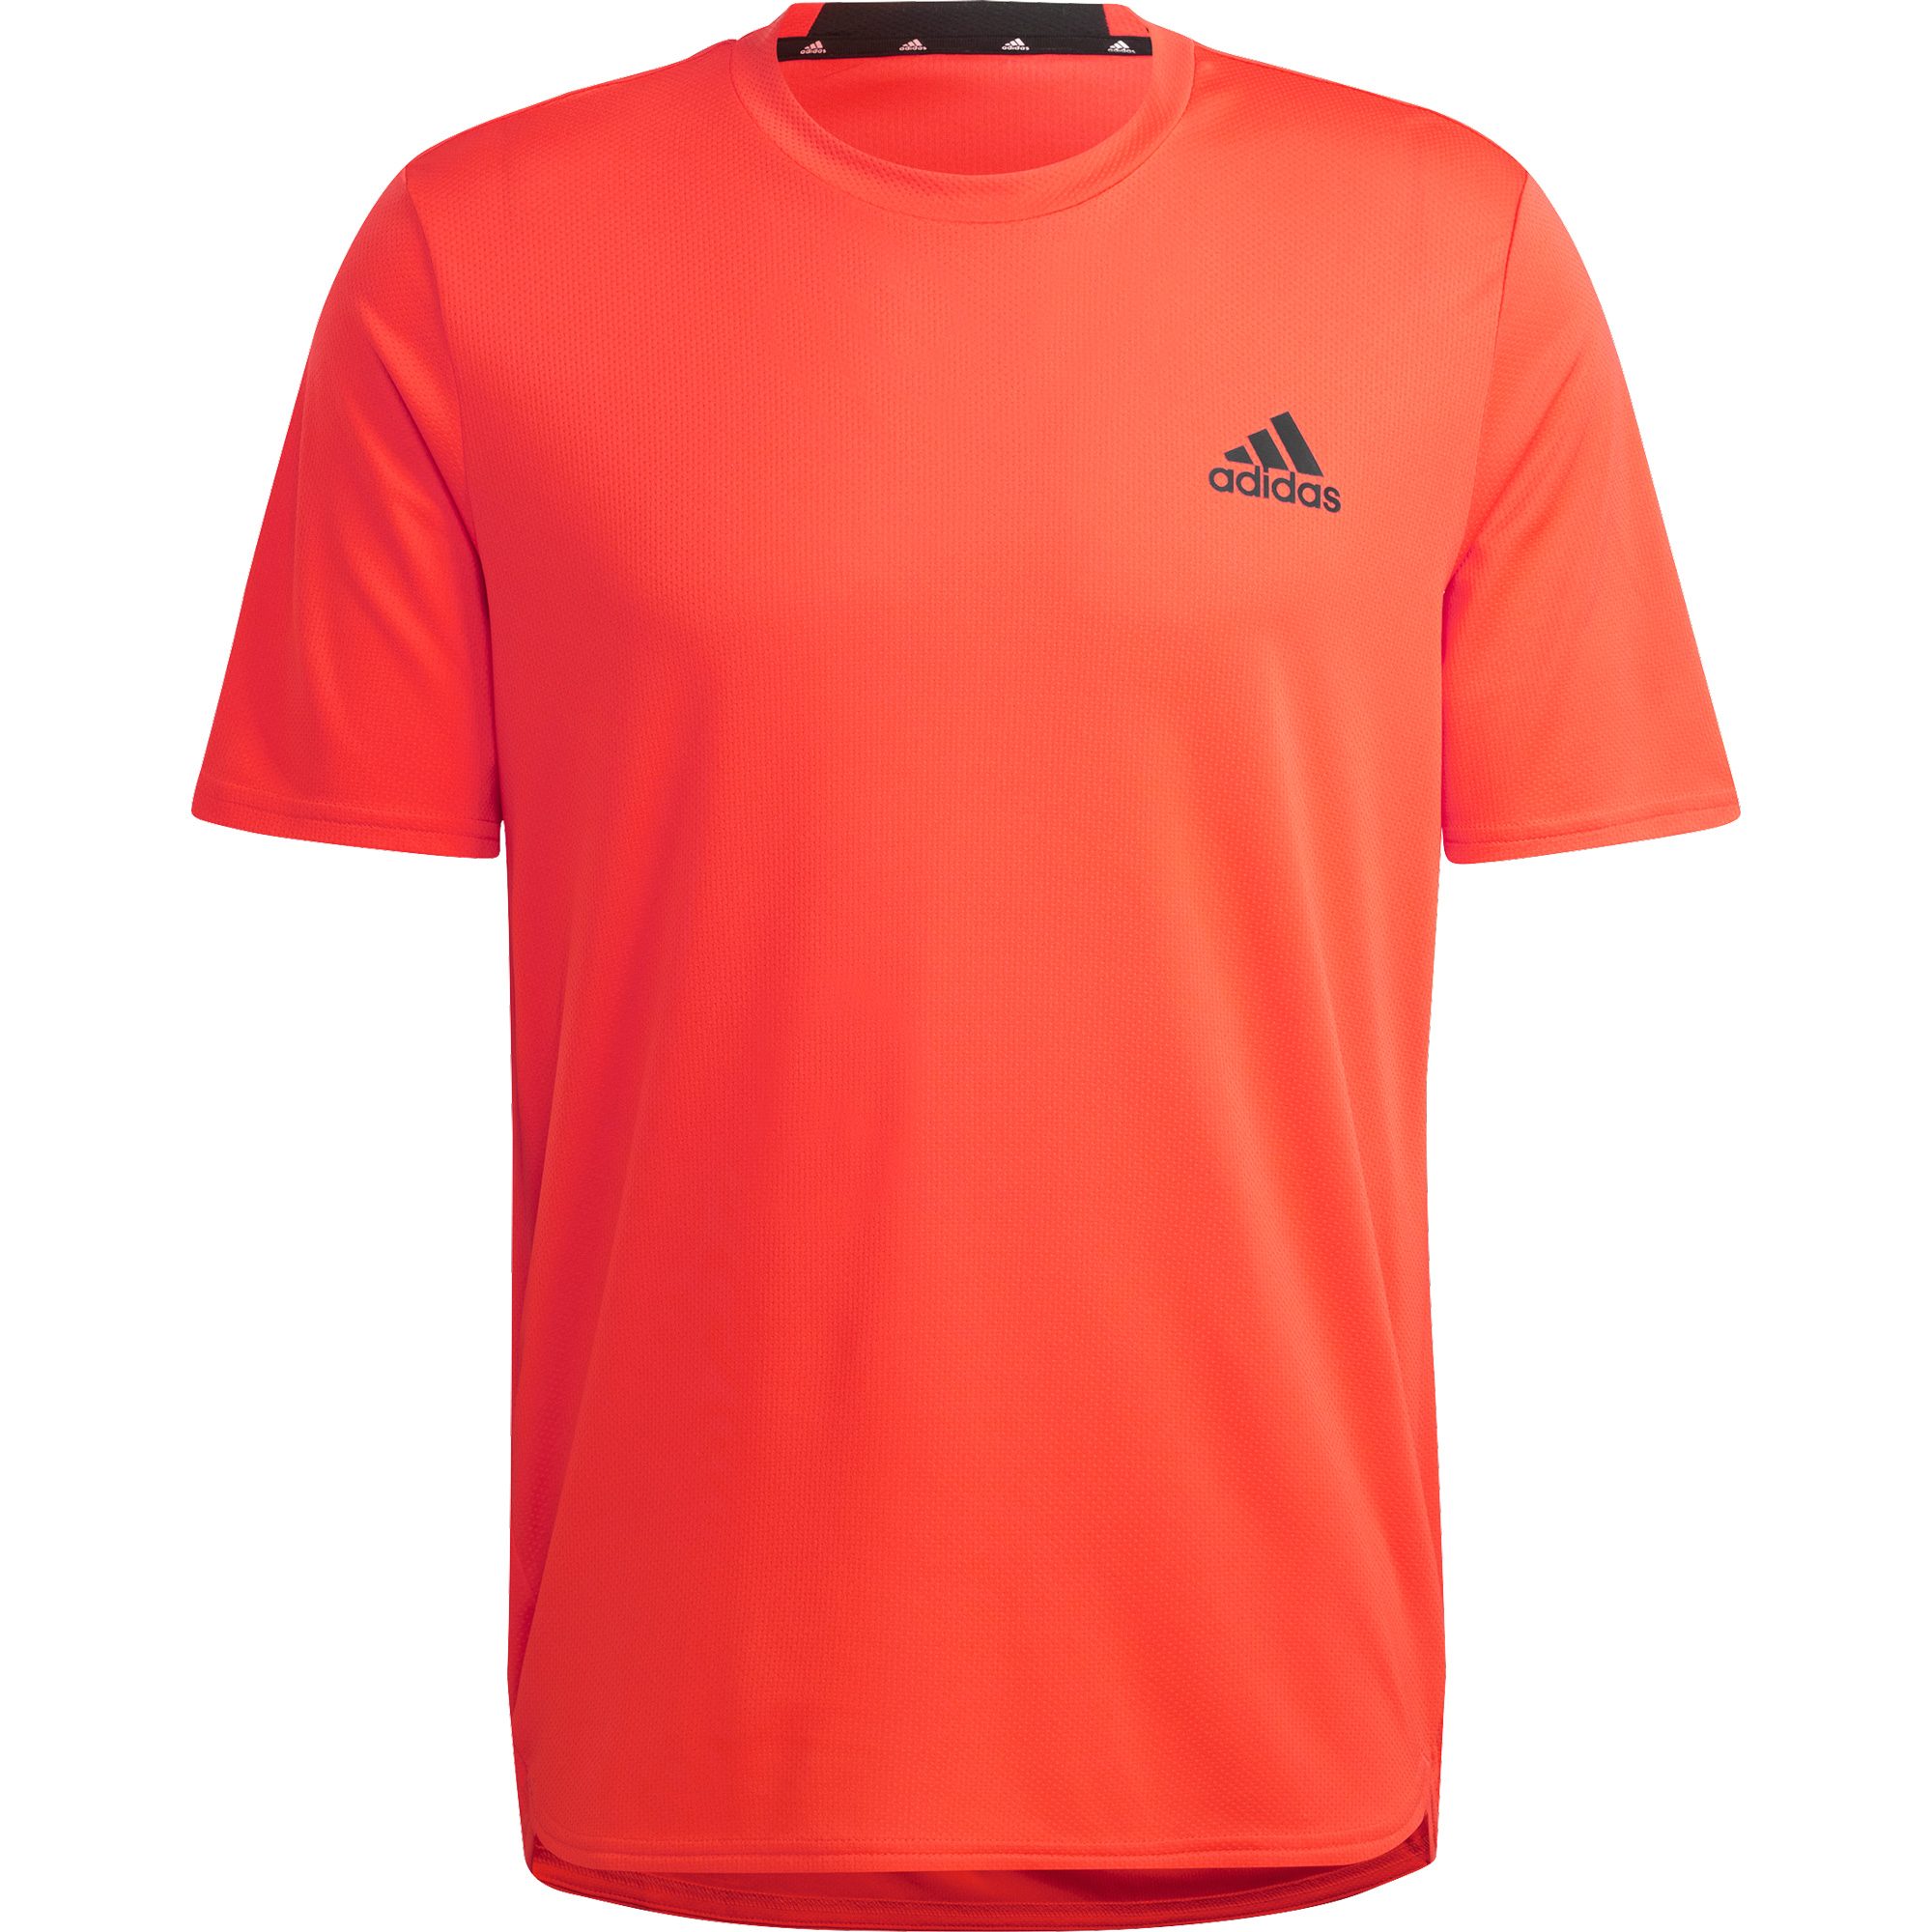 adidas - Sport hellrot for Designed Aeroready im Shop T-Shirt Bittl Movement kaufen Herren